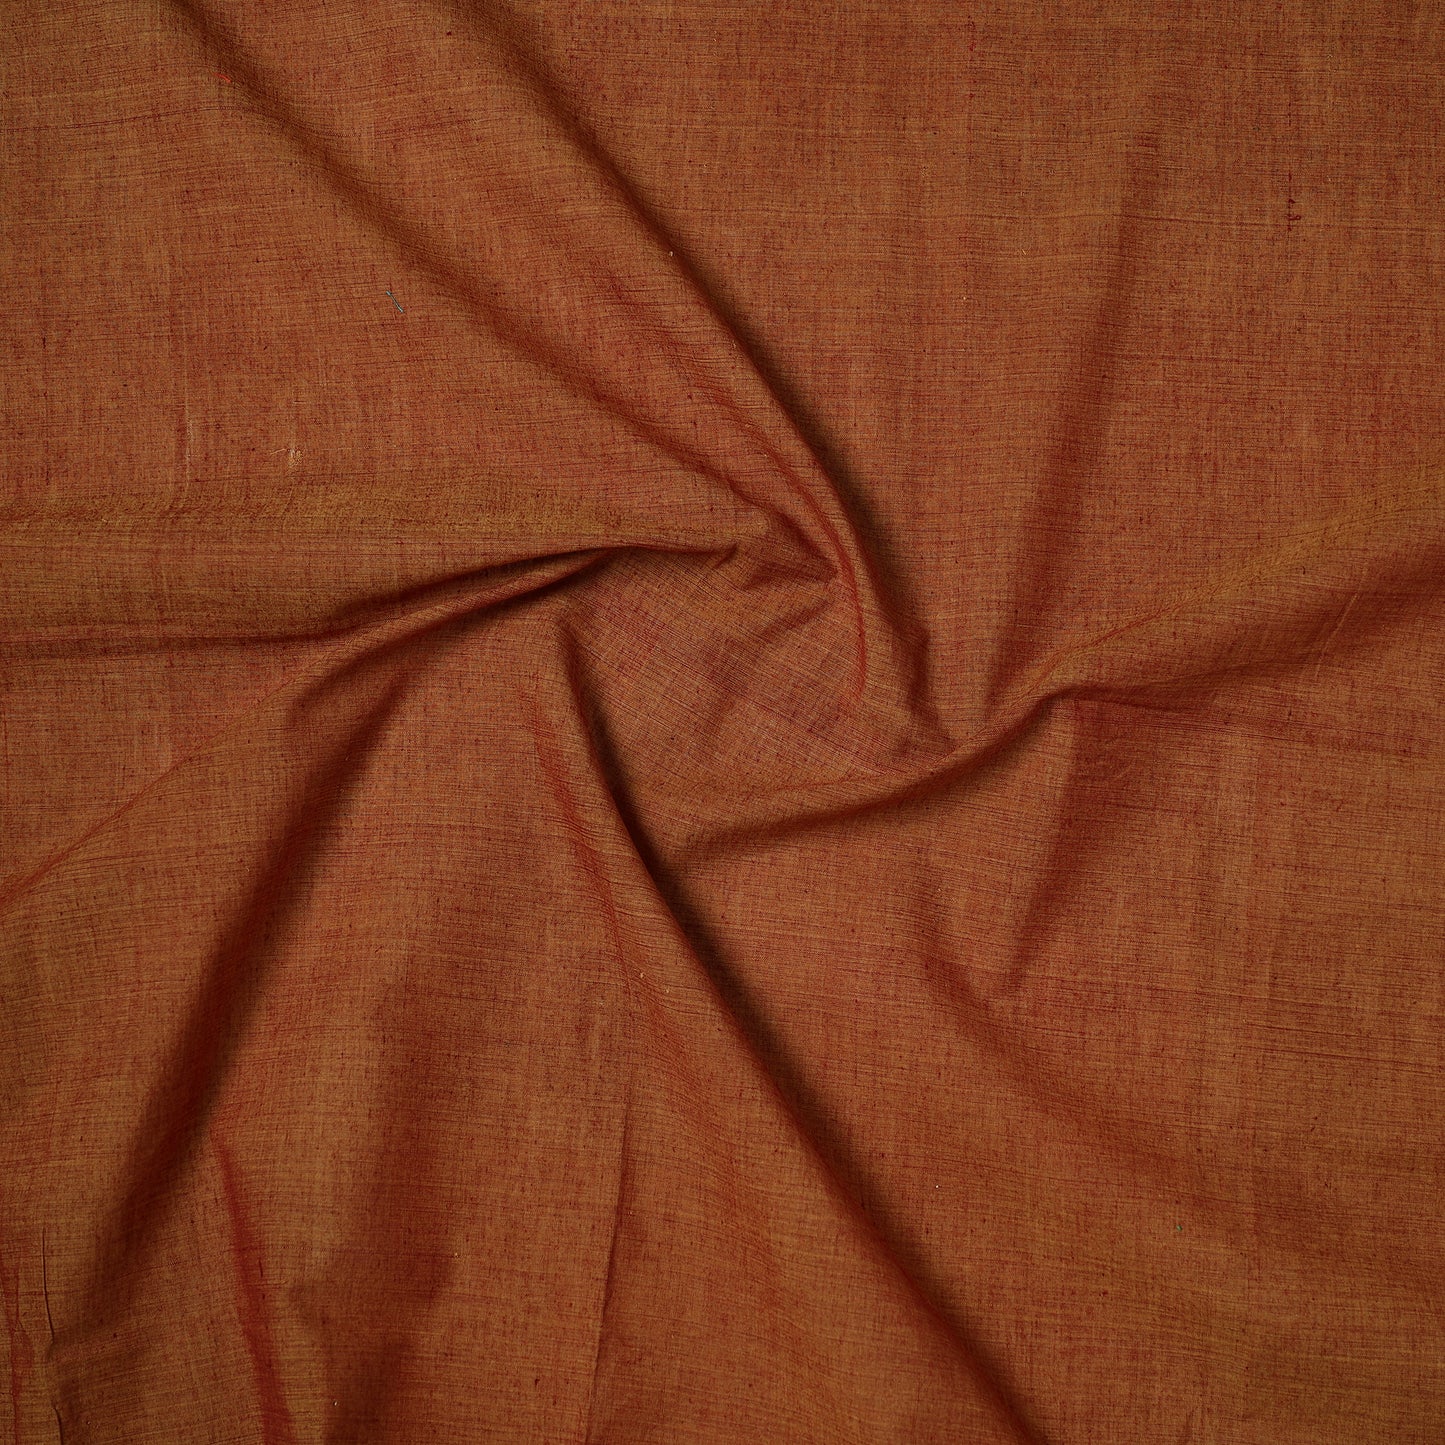 Brown - Mangalagiri Handloom Cotton Precut Fabric (1 meter) 77